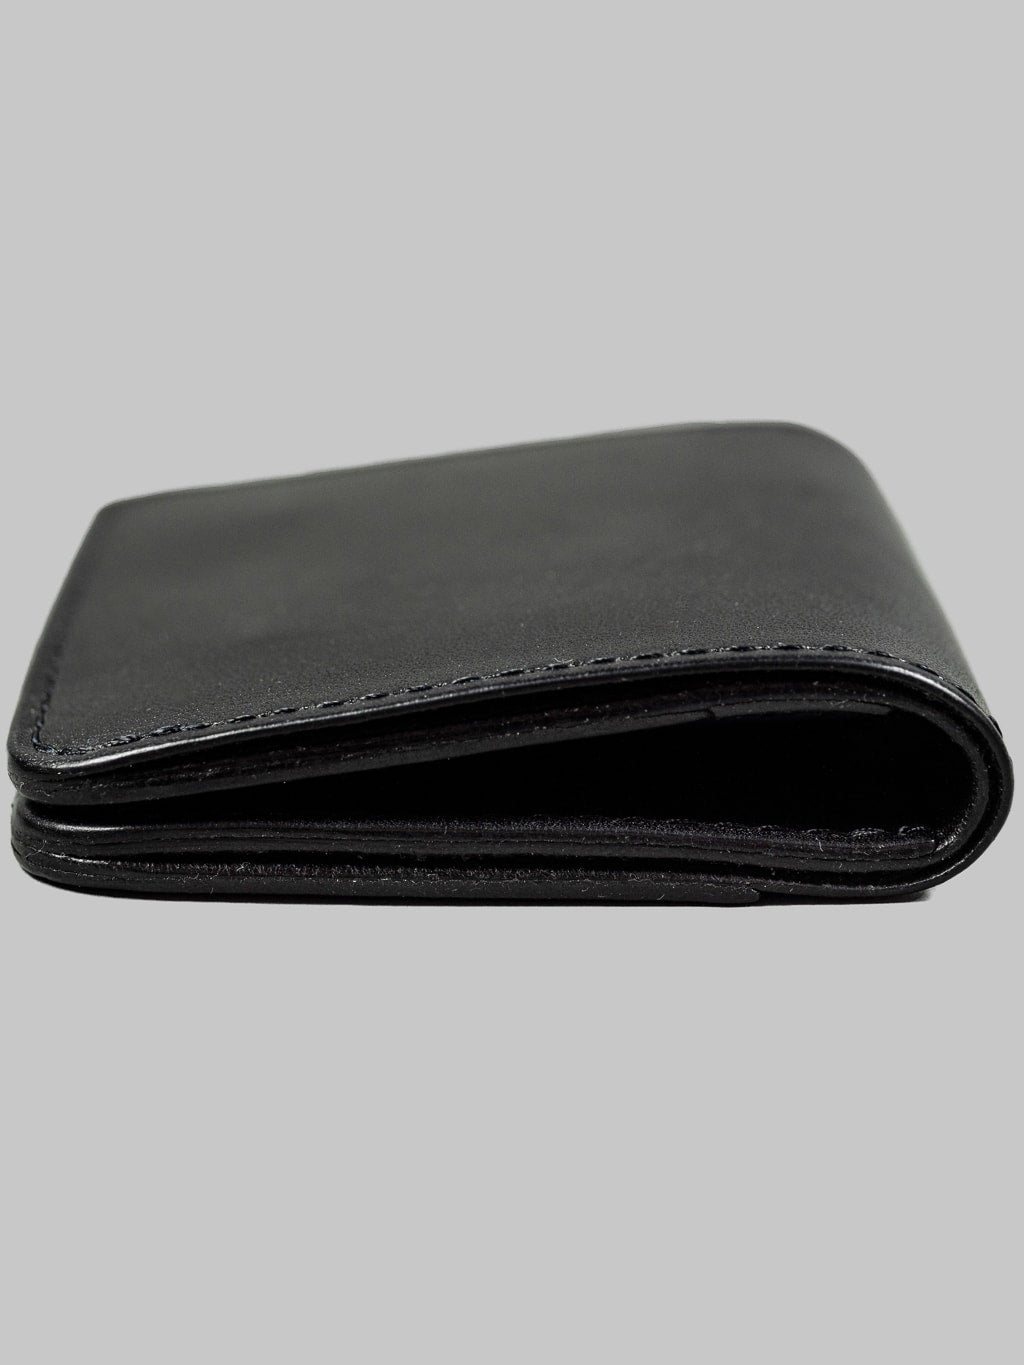 Studio Dartisan black  leather mini wallet side view